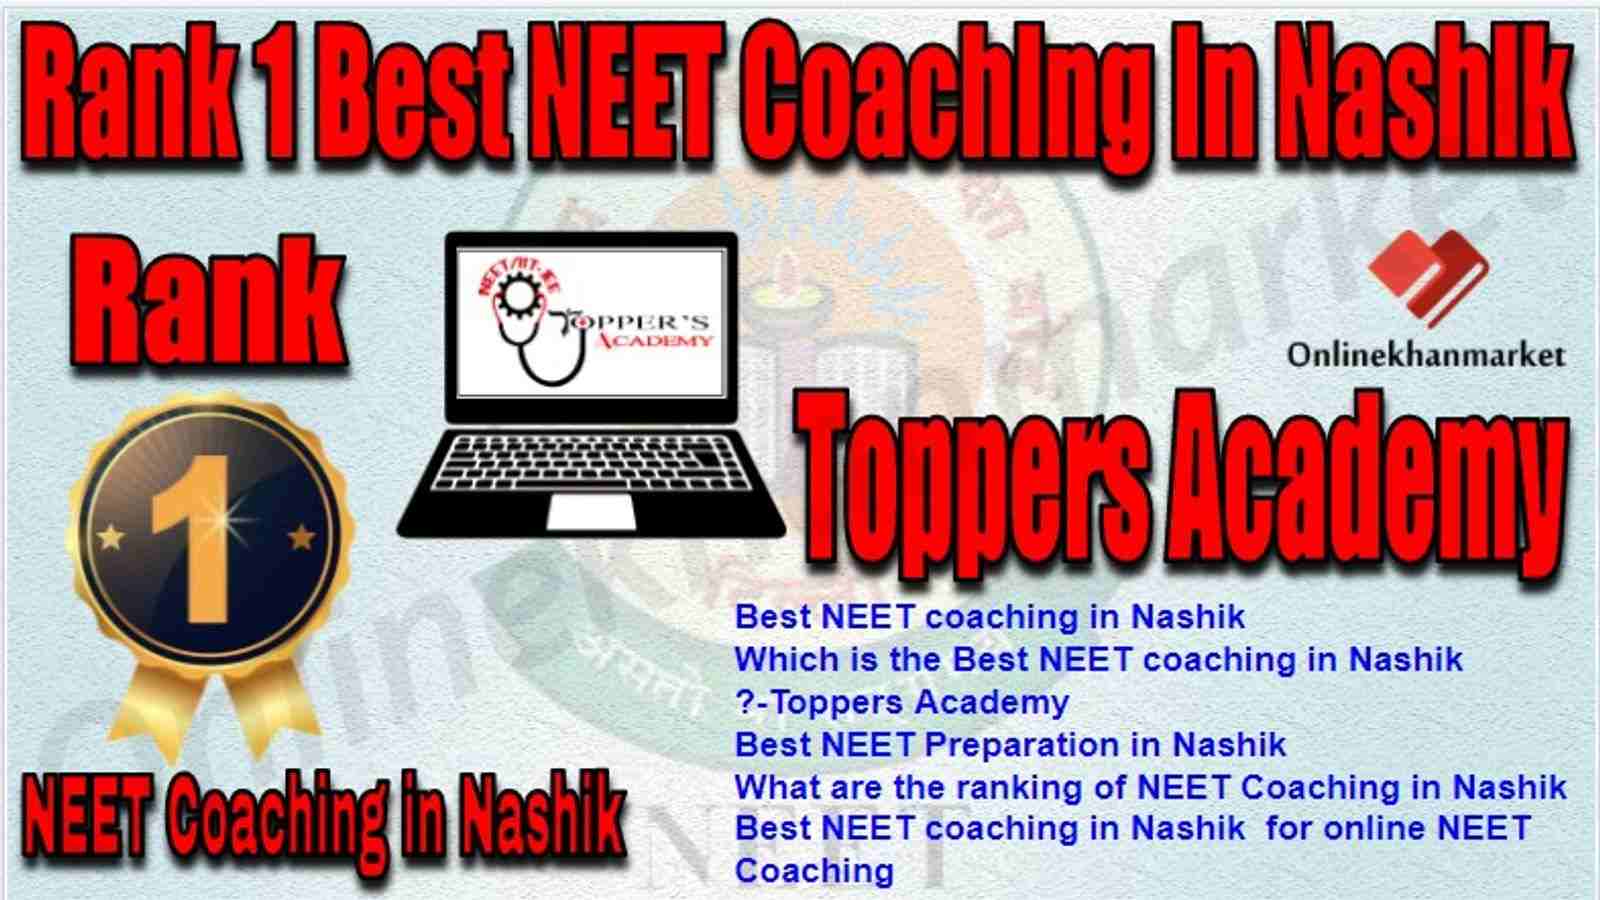 Rank 1 Best NEET Coaching Nashik